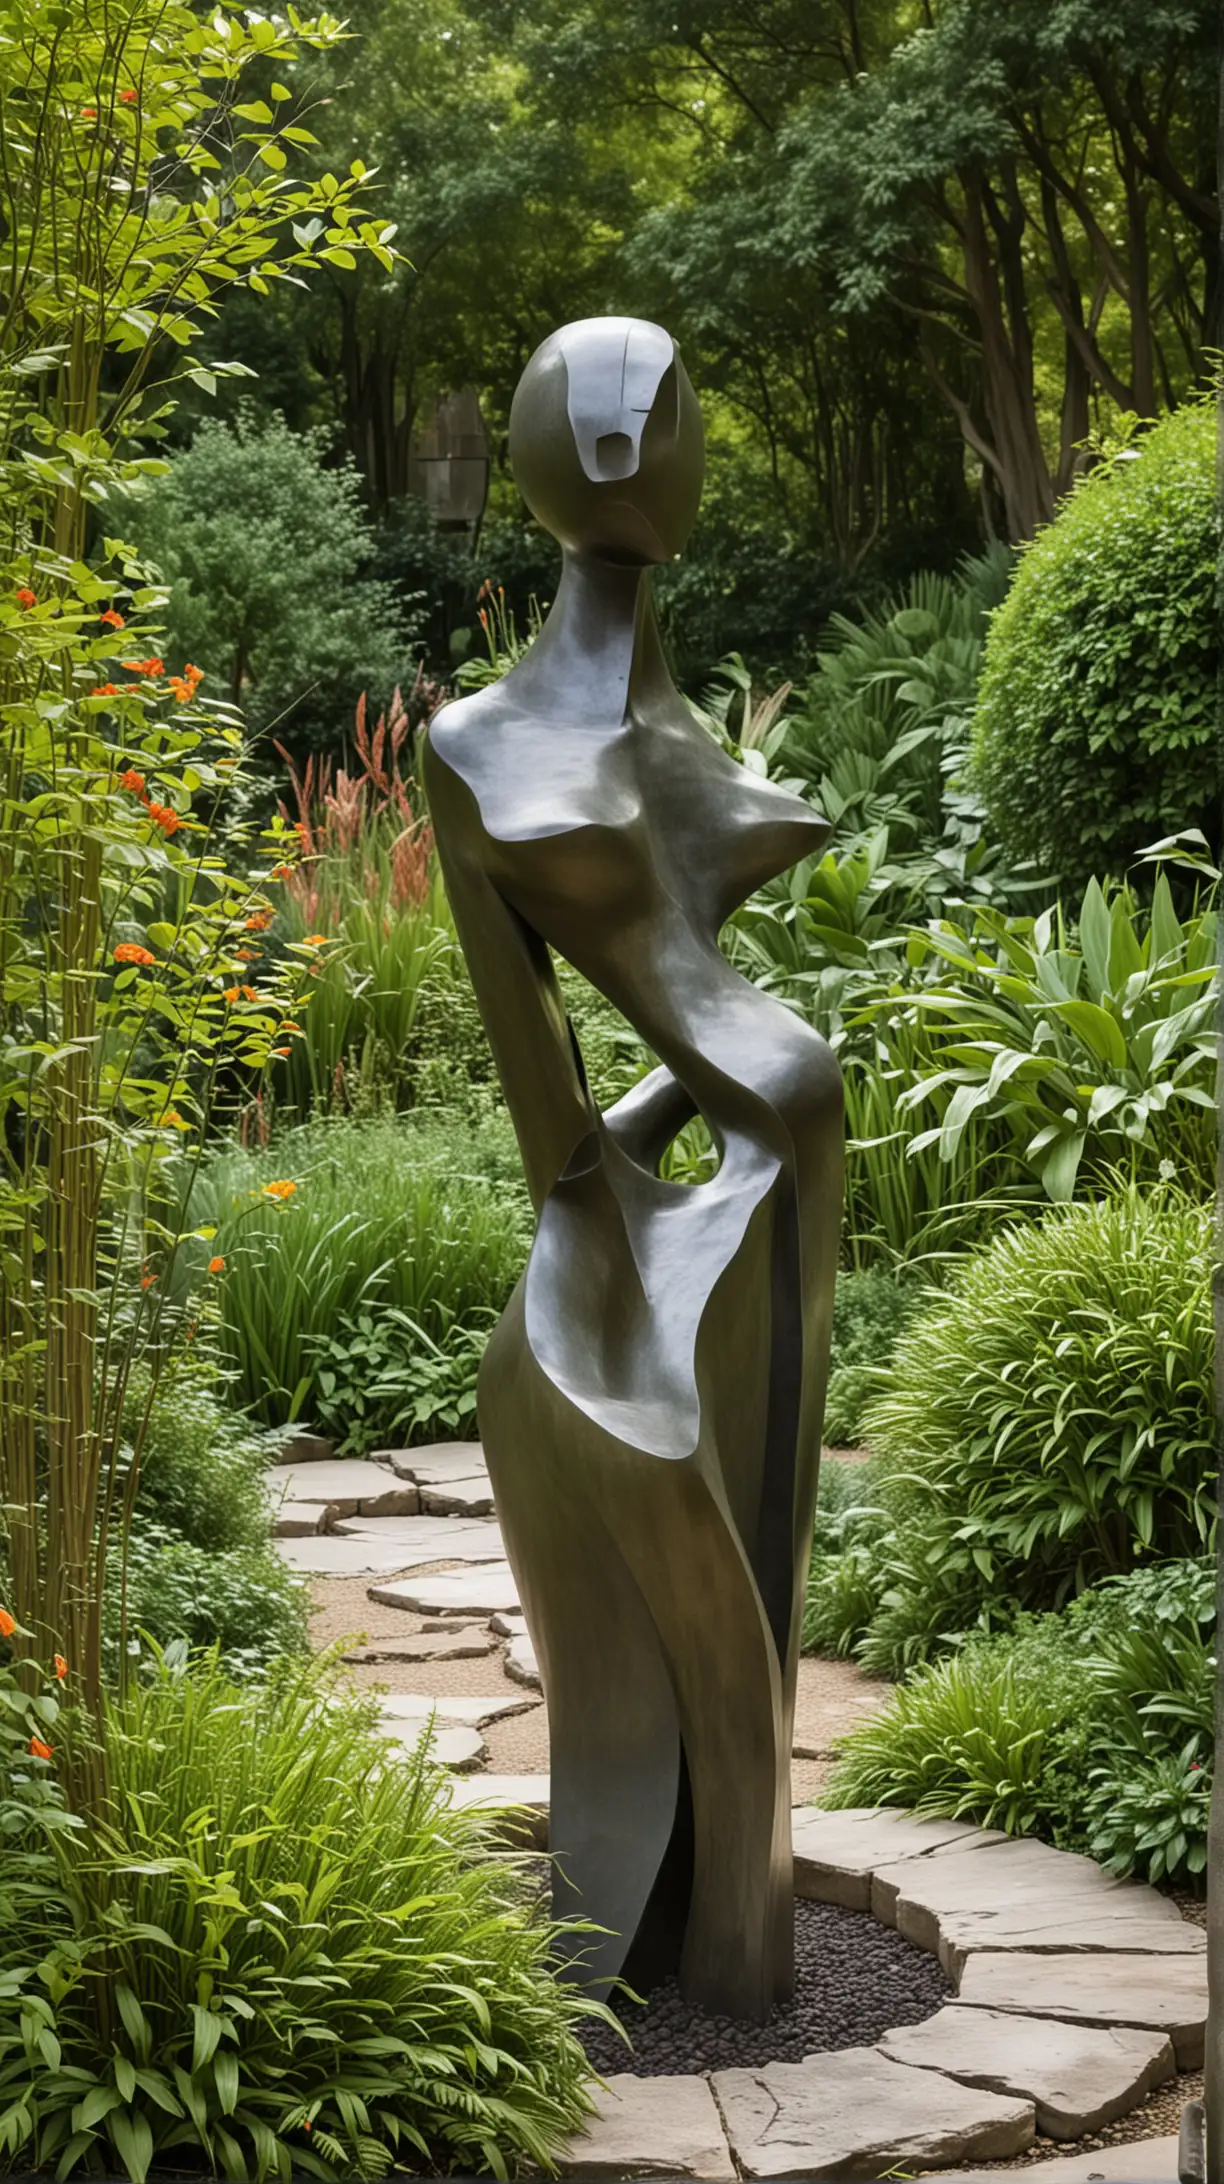 An artistic outdoor sculpture garden featuring various abstract and figurative sculptures, set among a well-landscaped garden.